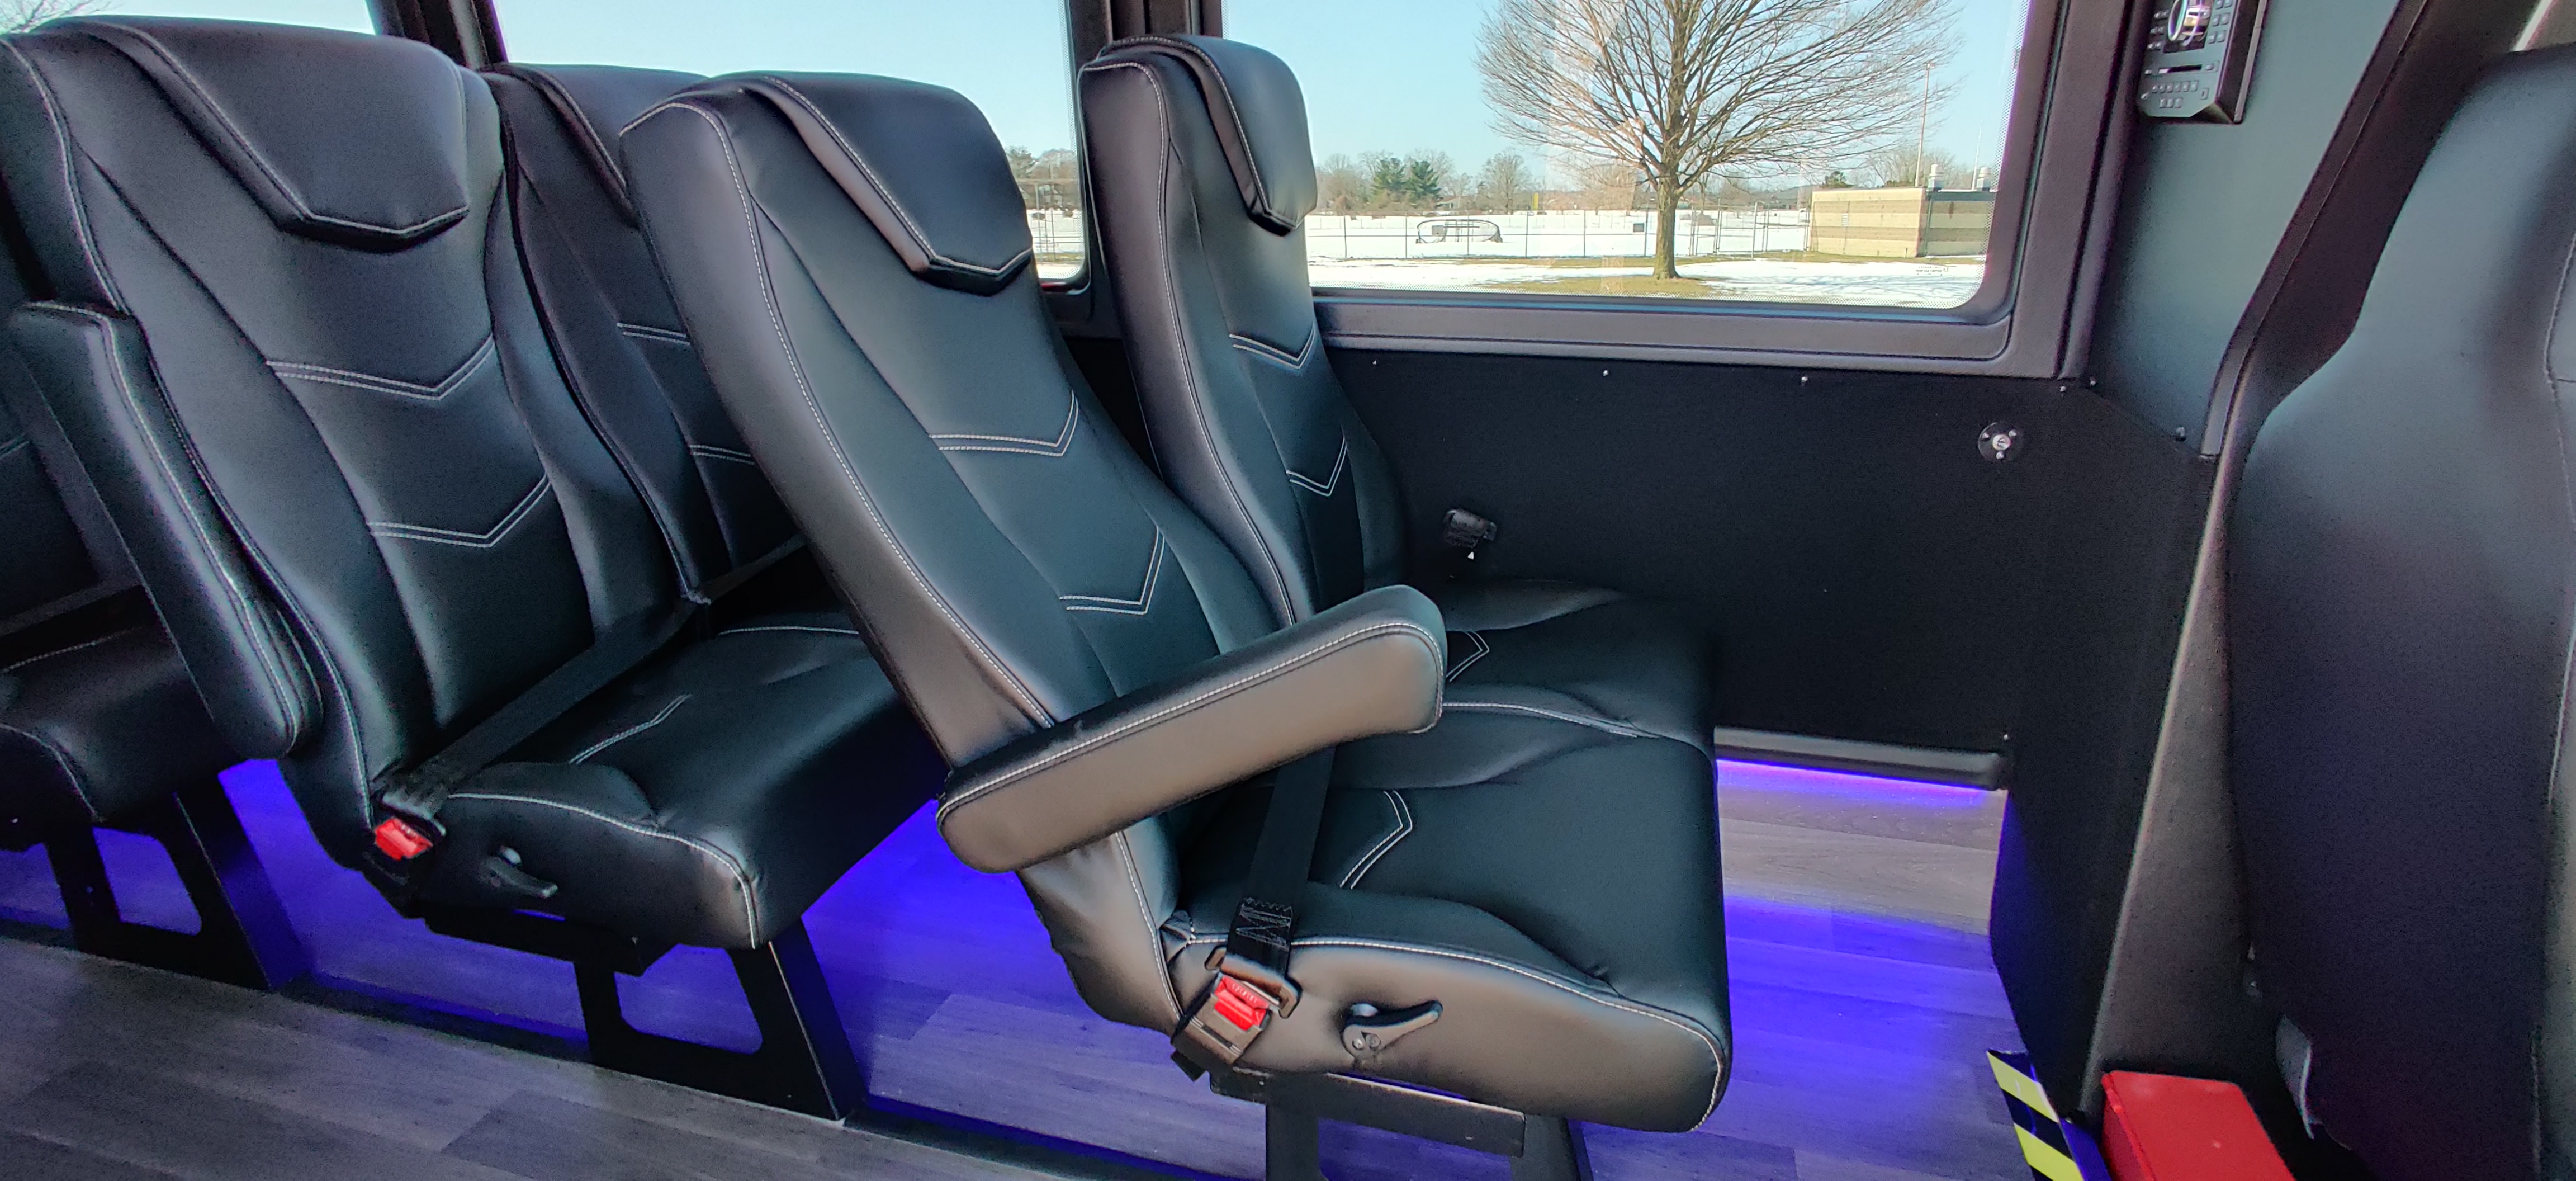 26 Passenger Executive Shuttle Bus Seat Function